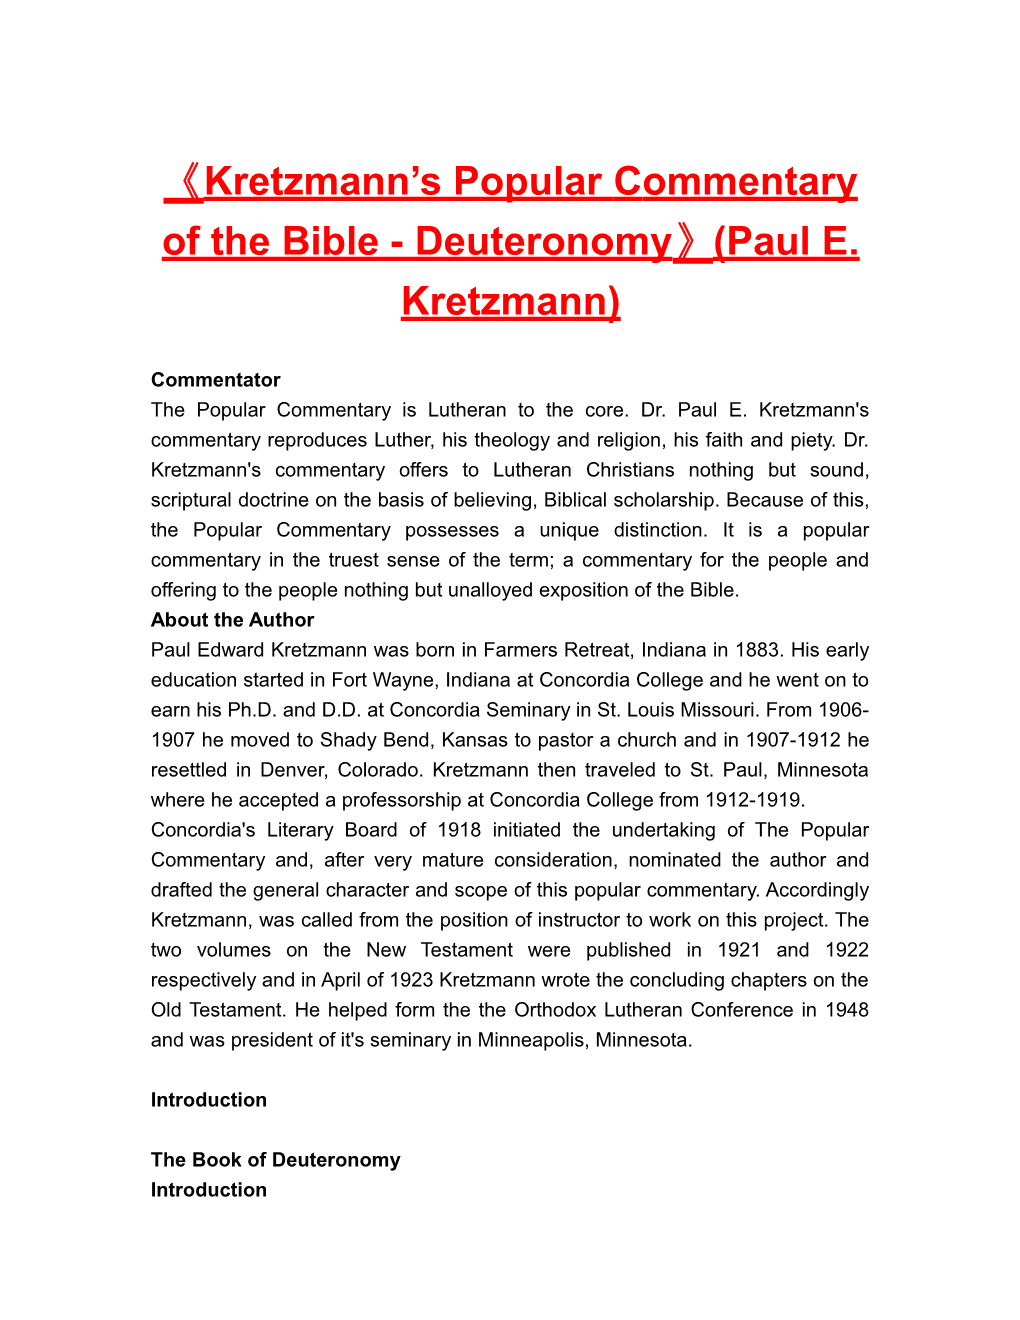 Kretzmann S Popularcommentary of the Bible-Deuteronomy (Paul E. Kretzmann)